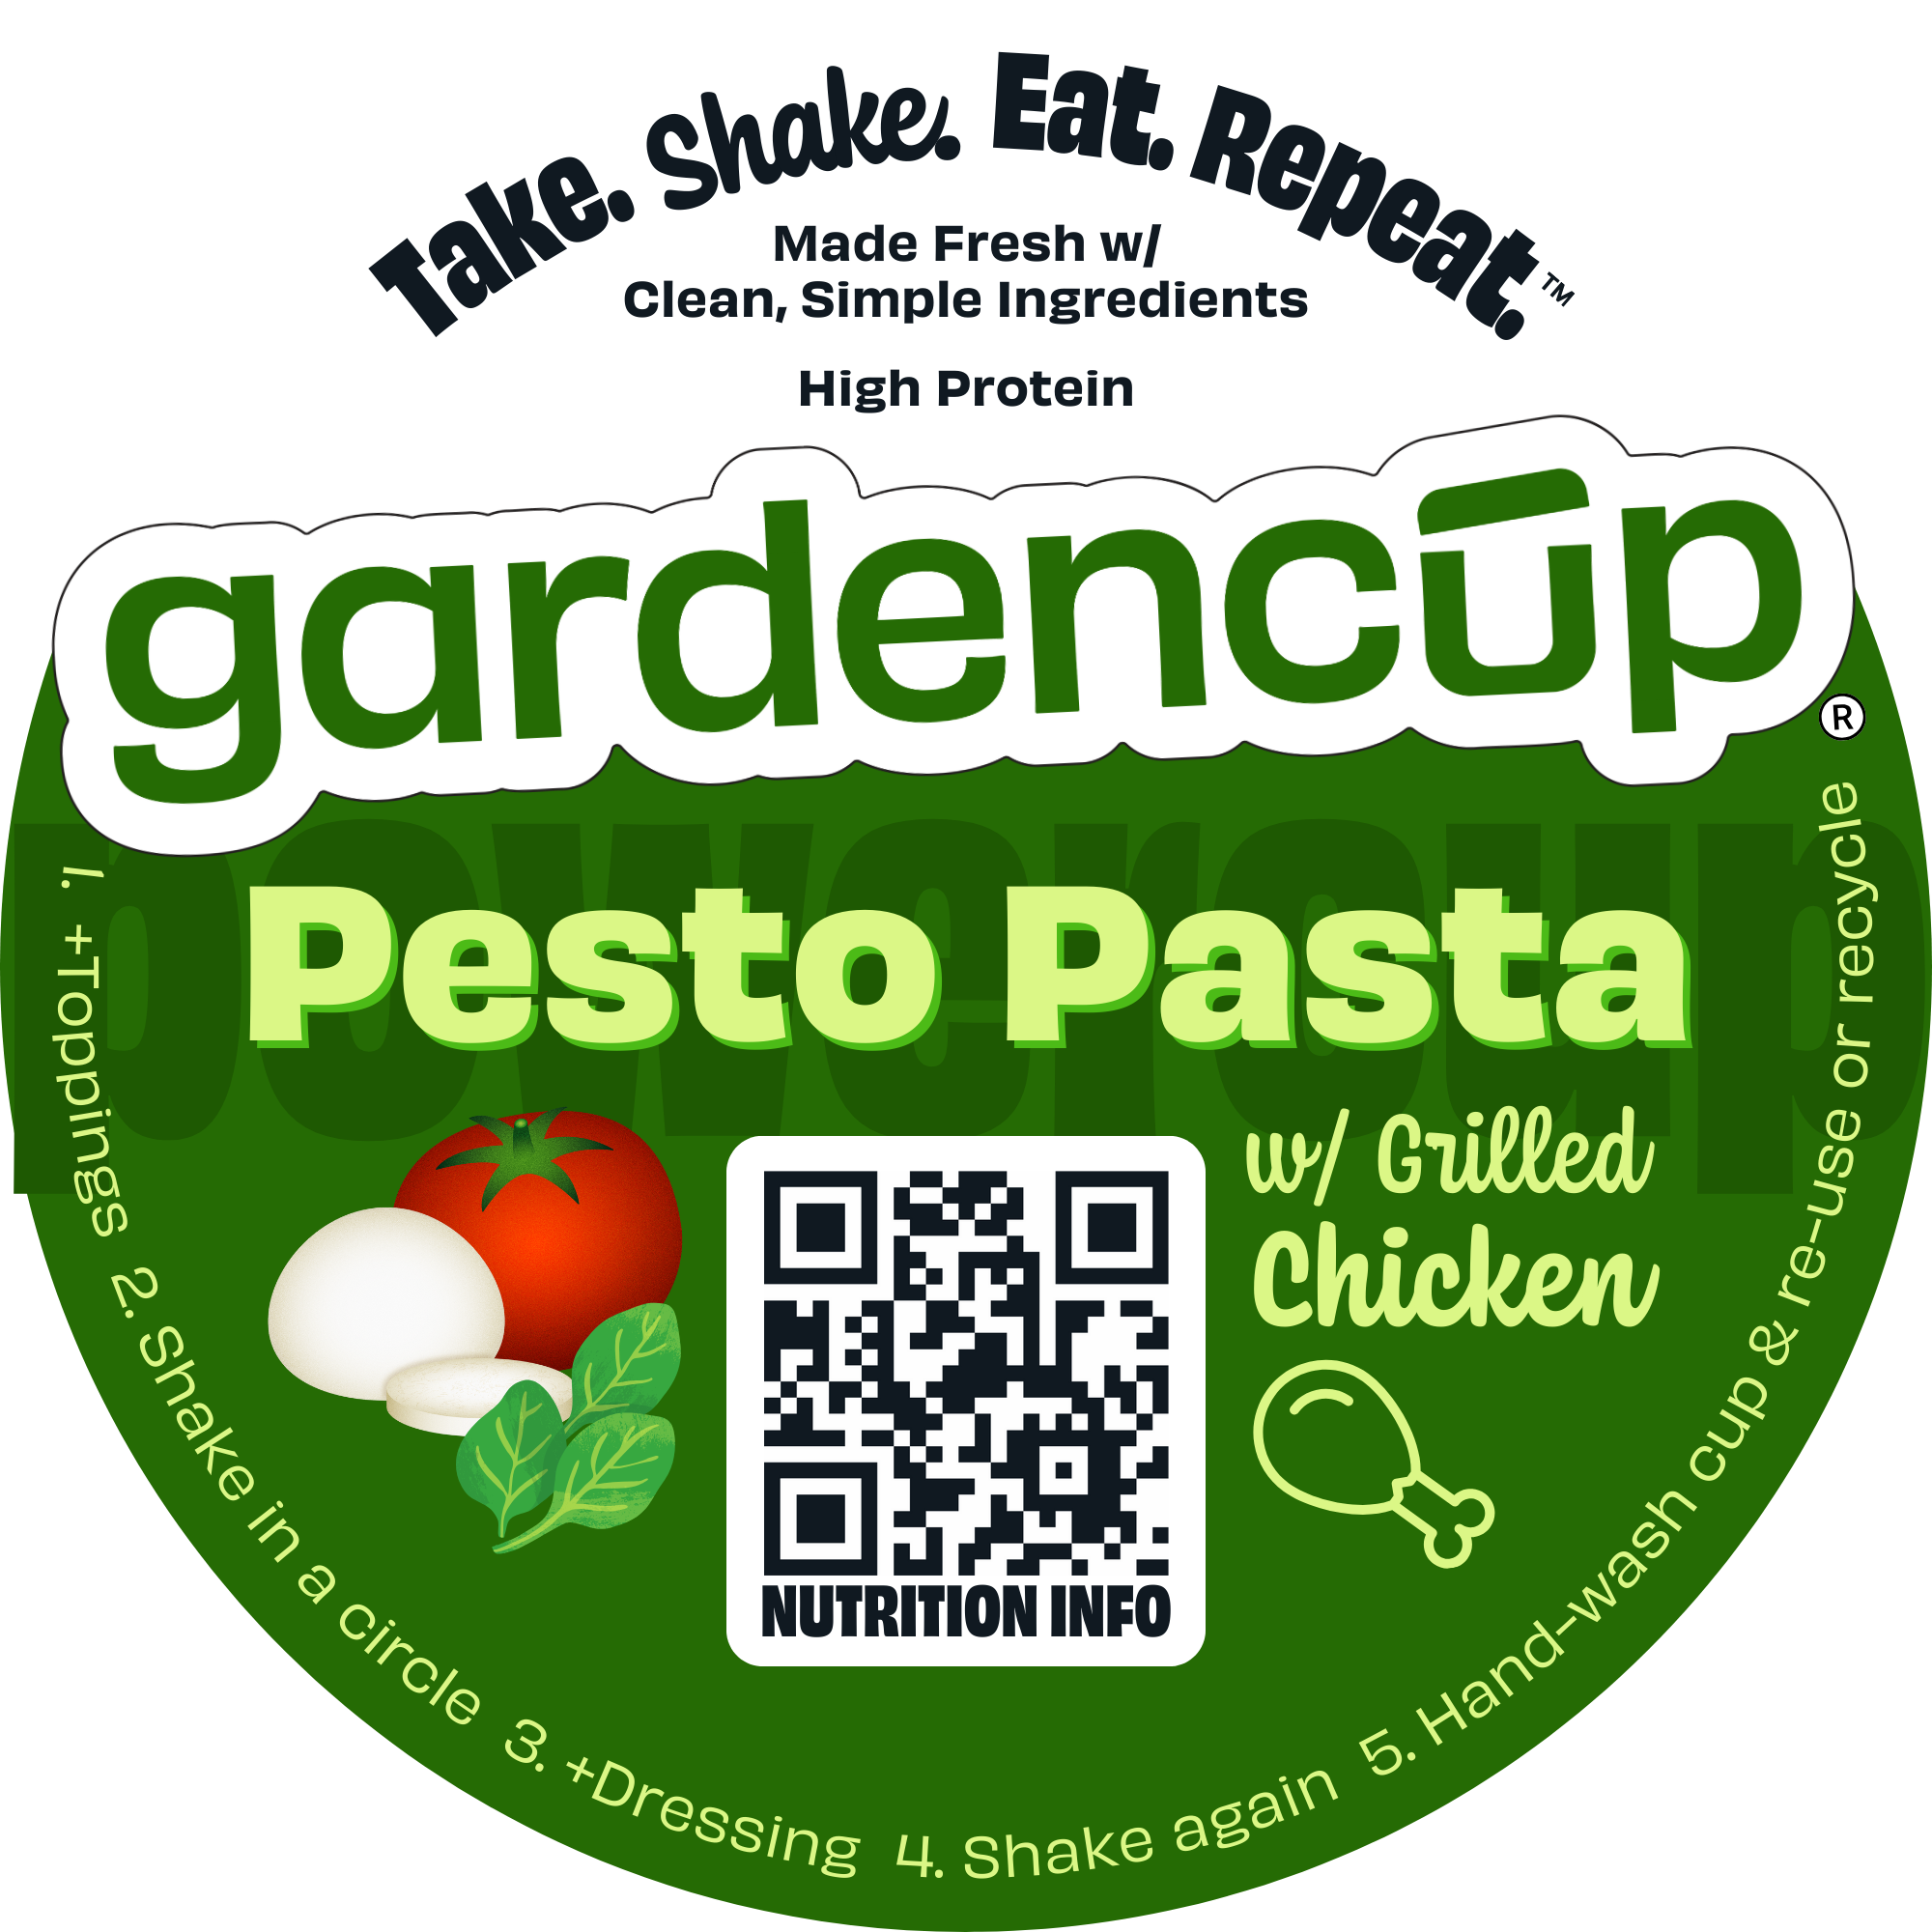 Pesto Pasta Powercup w/Grilled Chicken